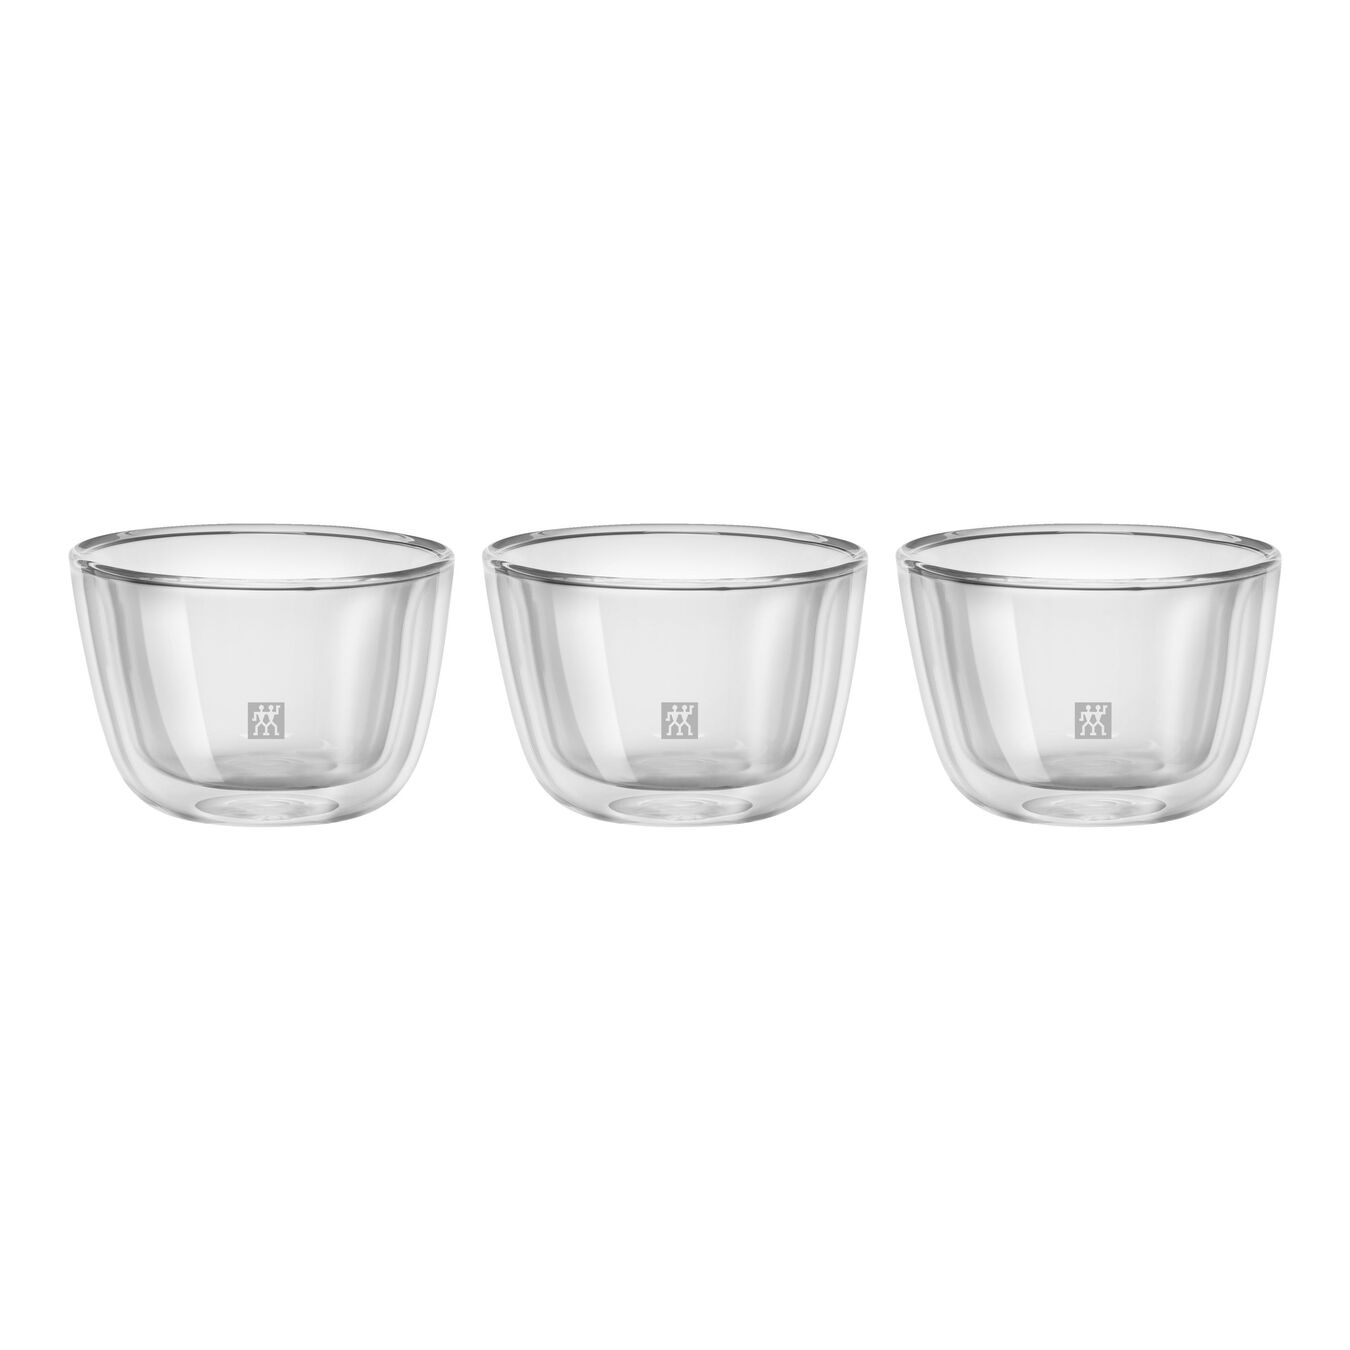 3 Piece borosilicate glass Double-wall Glass Bowl Set, transparent,,large 1